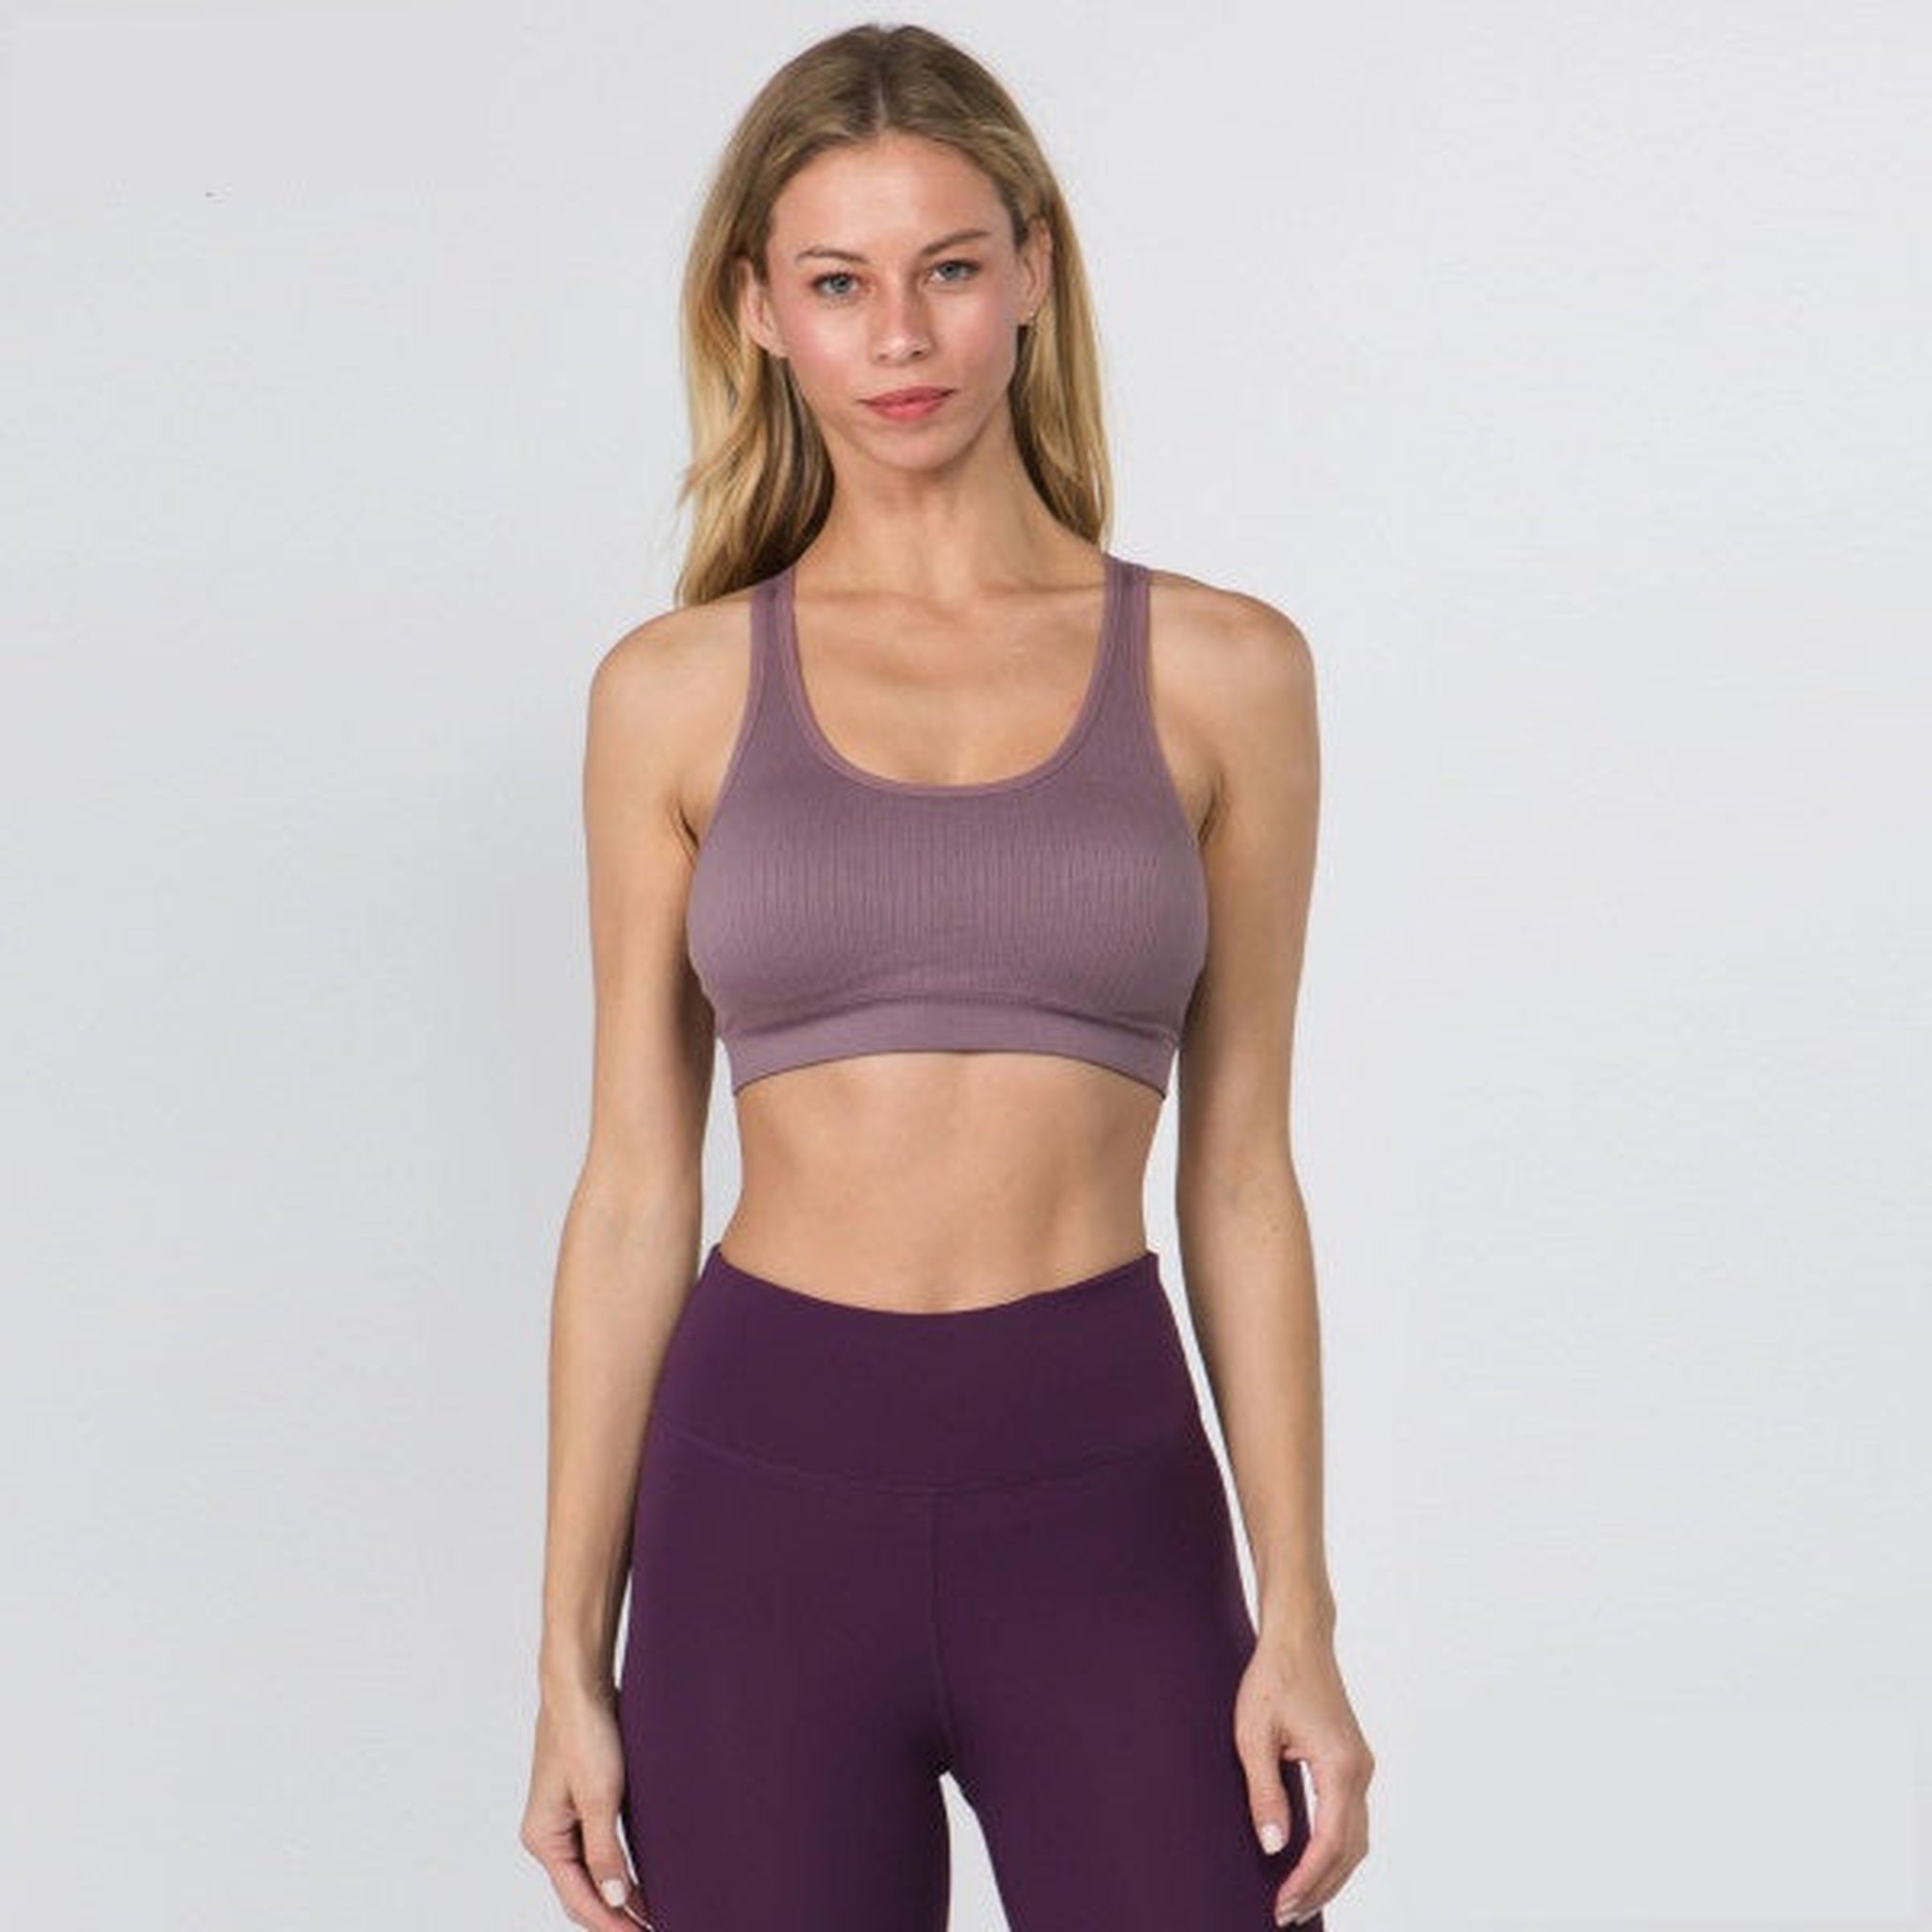 Columbia Sports Bra Purple - $12 (65% Off Retail) - From Olivia